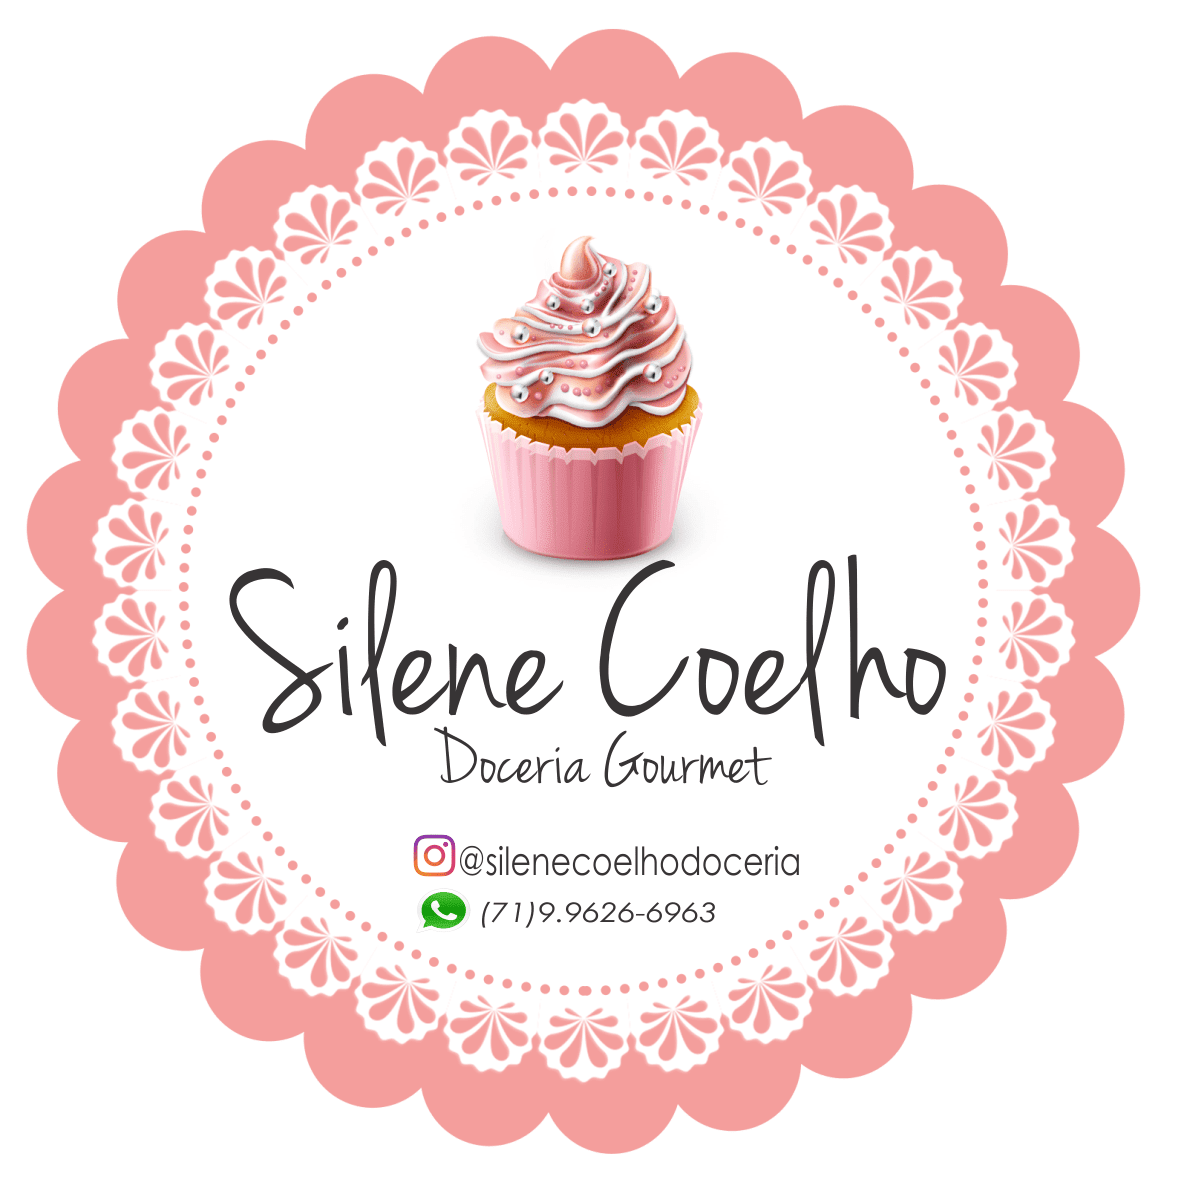 Silene Coelho Doceria Gourmet